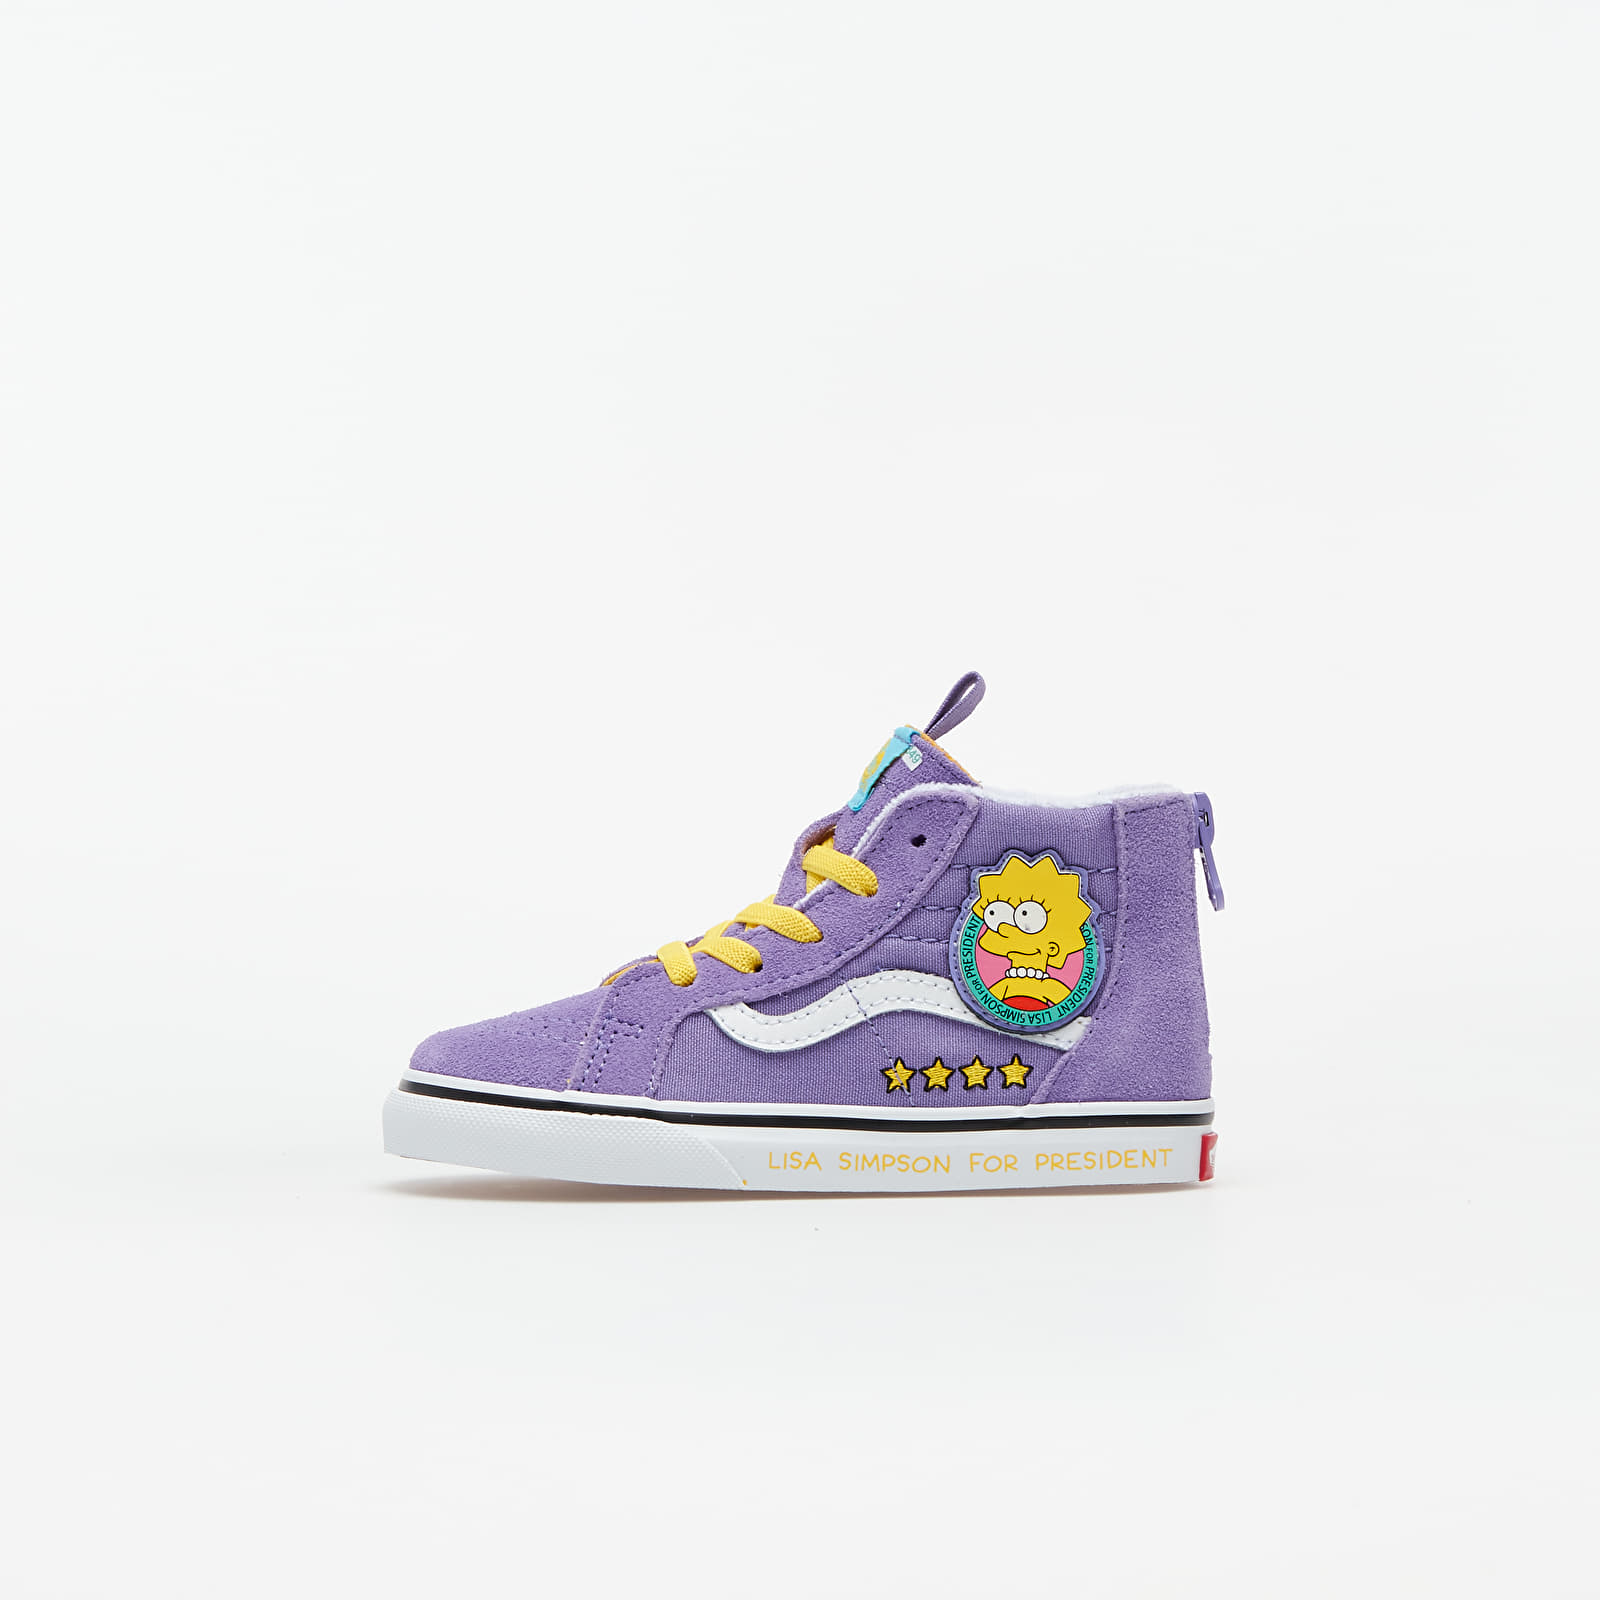 Kids' sneakers and shoes Vans Sk8-Hi Zip (The Simpsons) Lisa 4 Prez